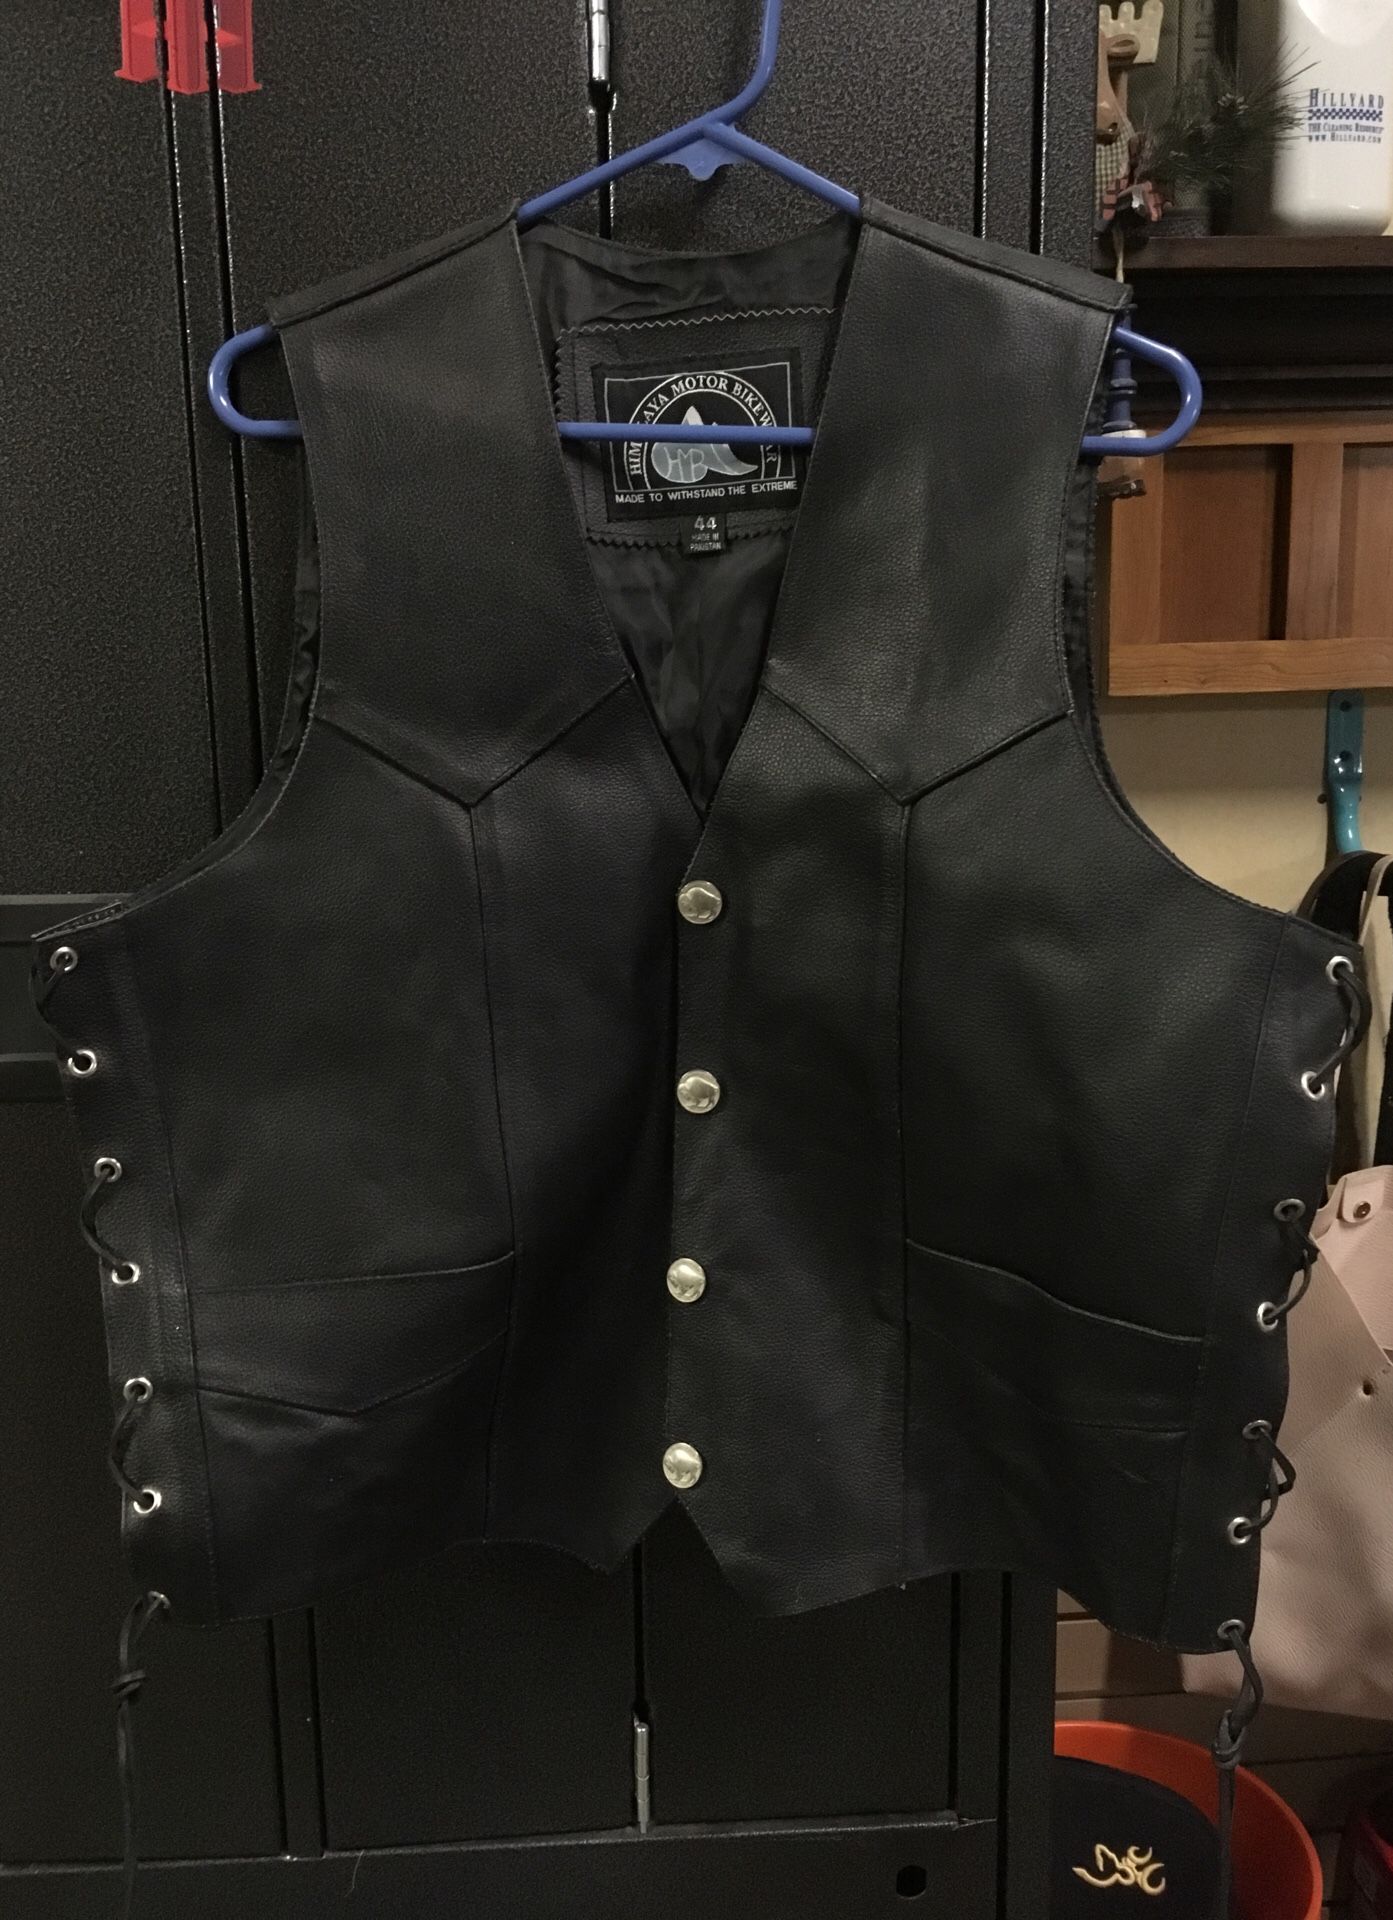 Woman’s biker vest